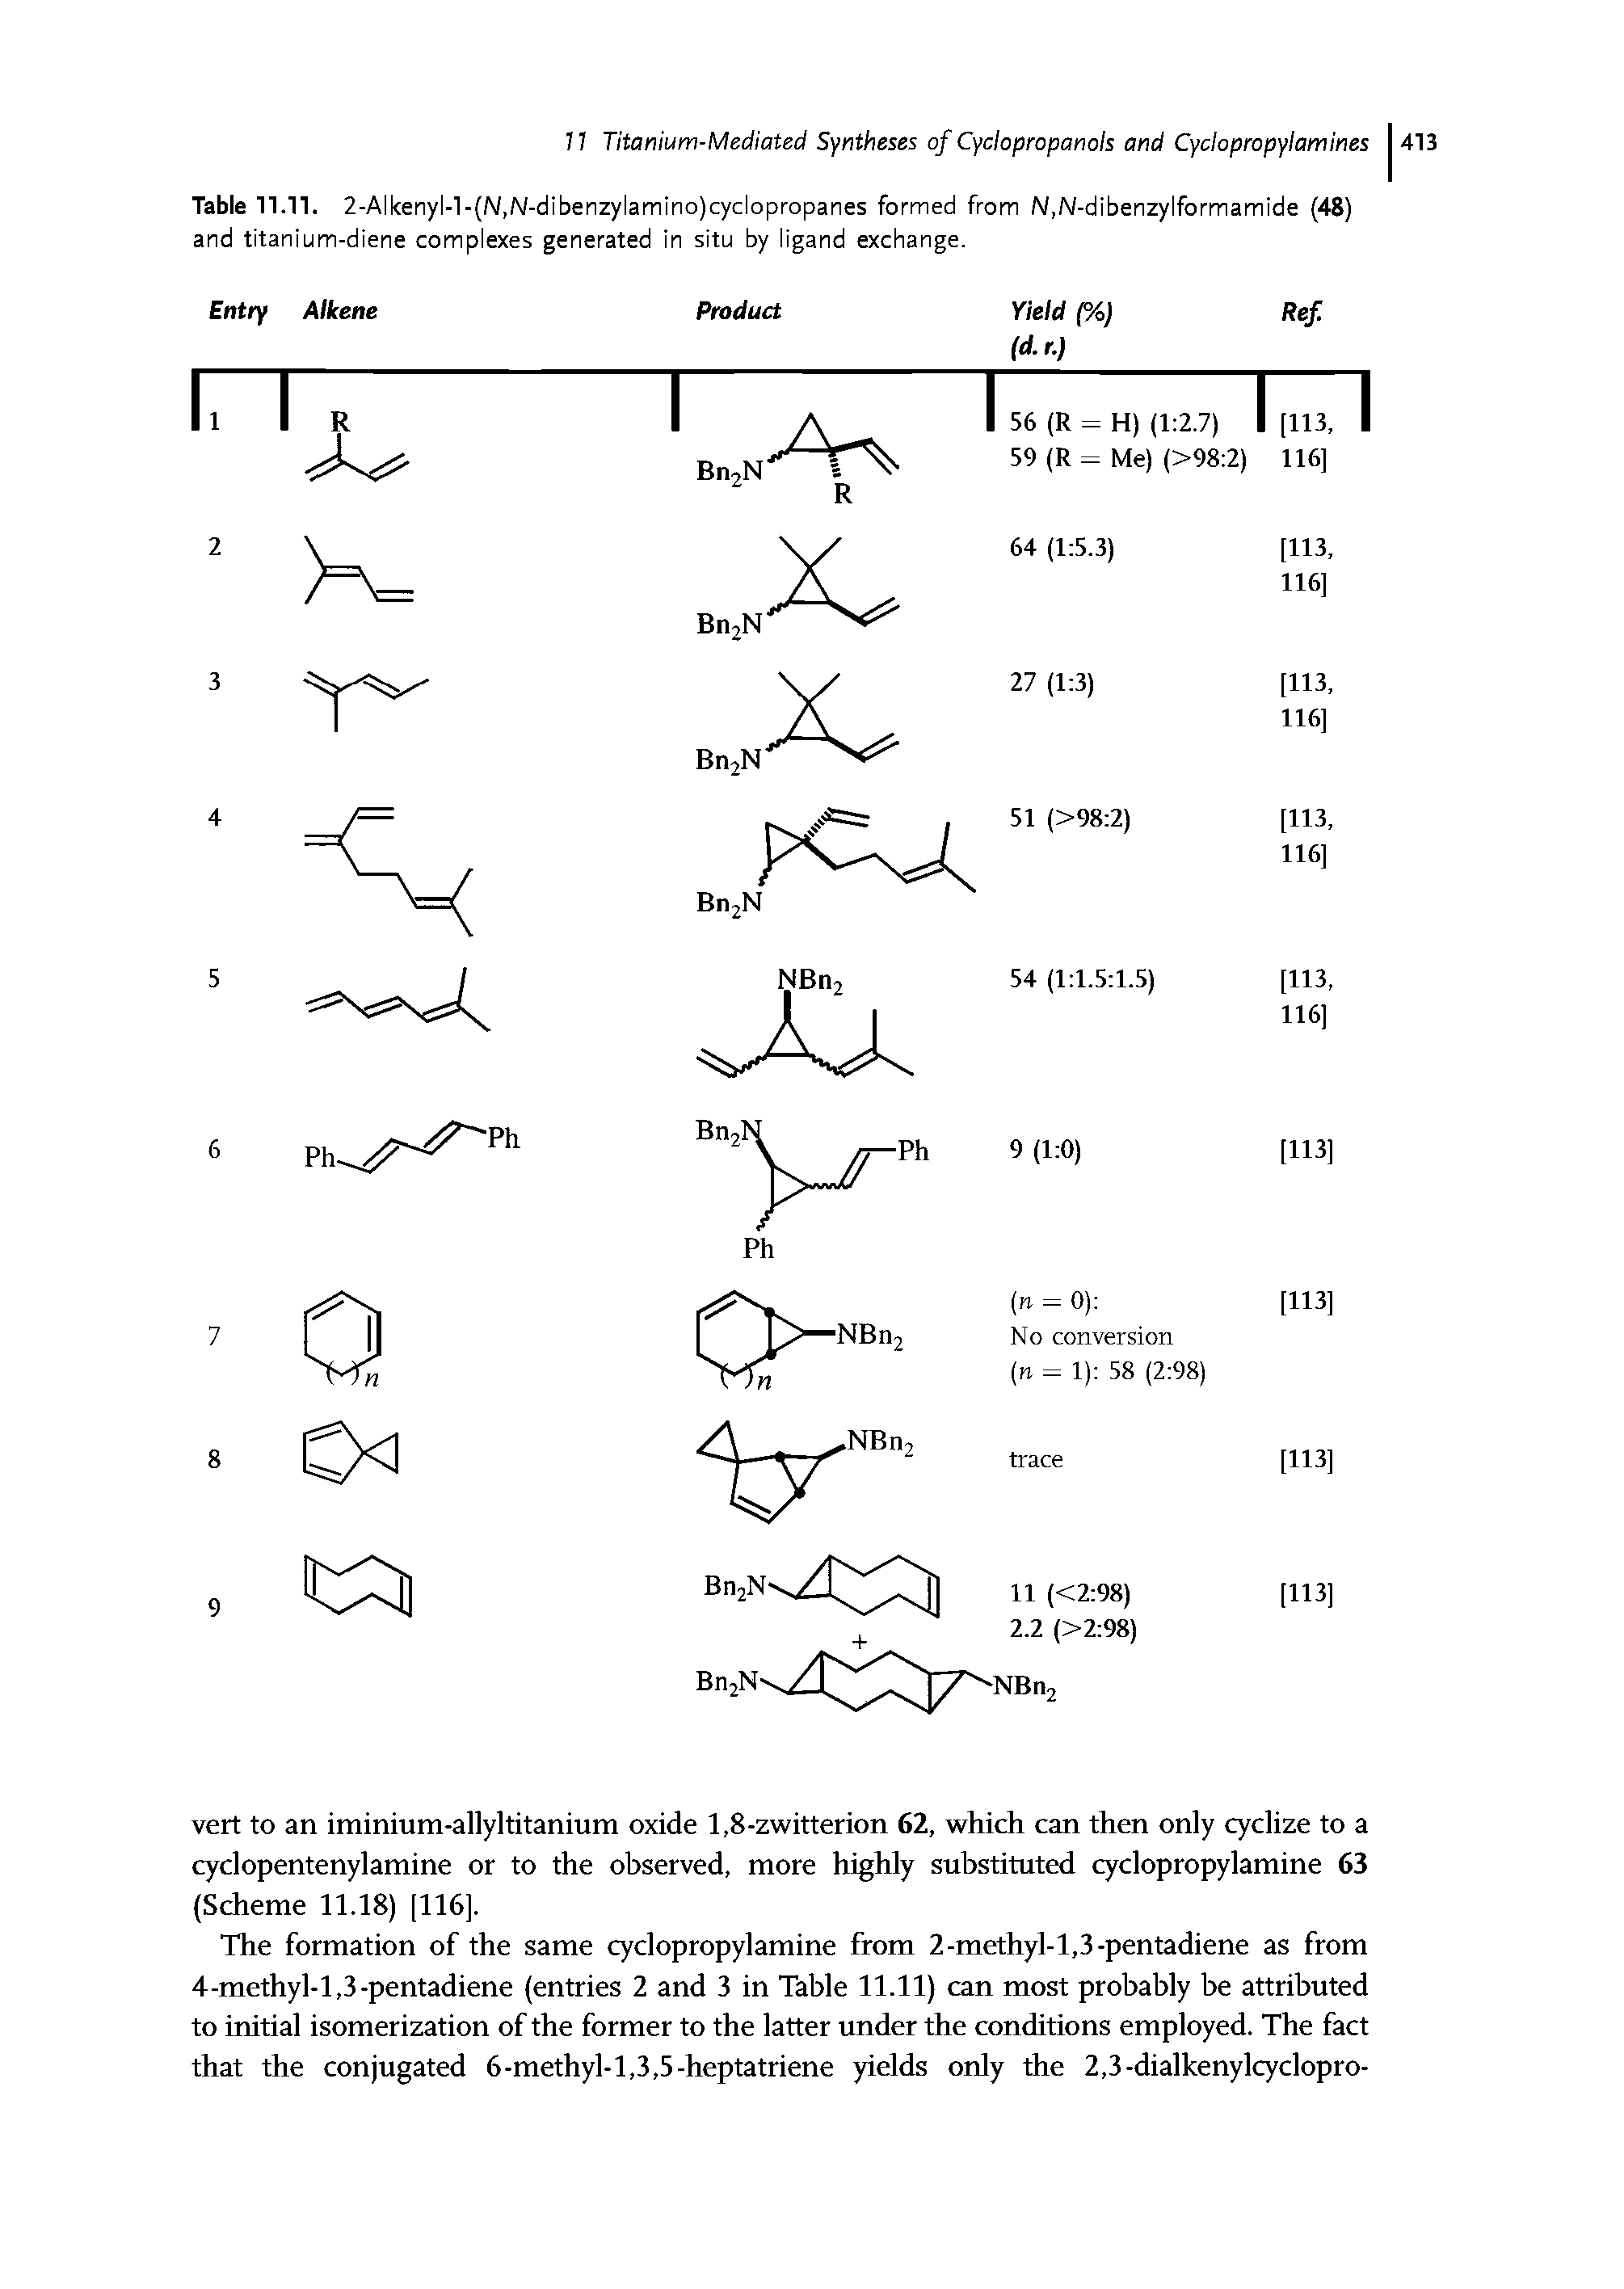 Table 11.11. 2-Alkenyl-l-(N,N-dibenzylamino)cyclopropanes formed from N,N-dibenzylformamide (48) and titanium-diene complexes generated in situ by ligand exchange.